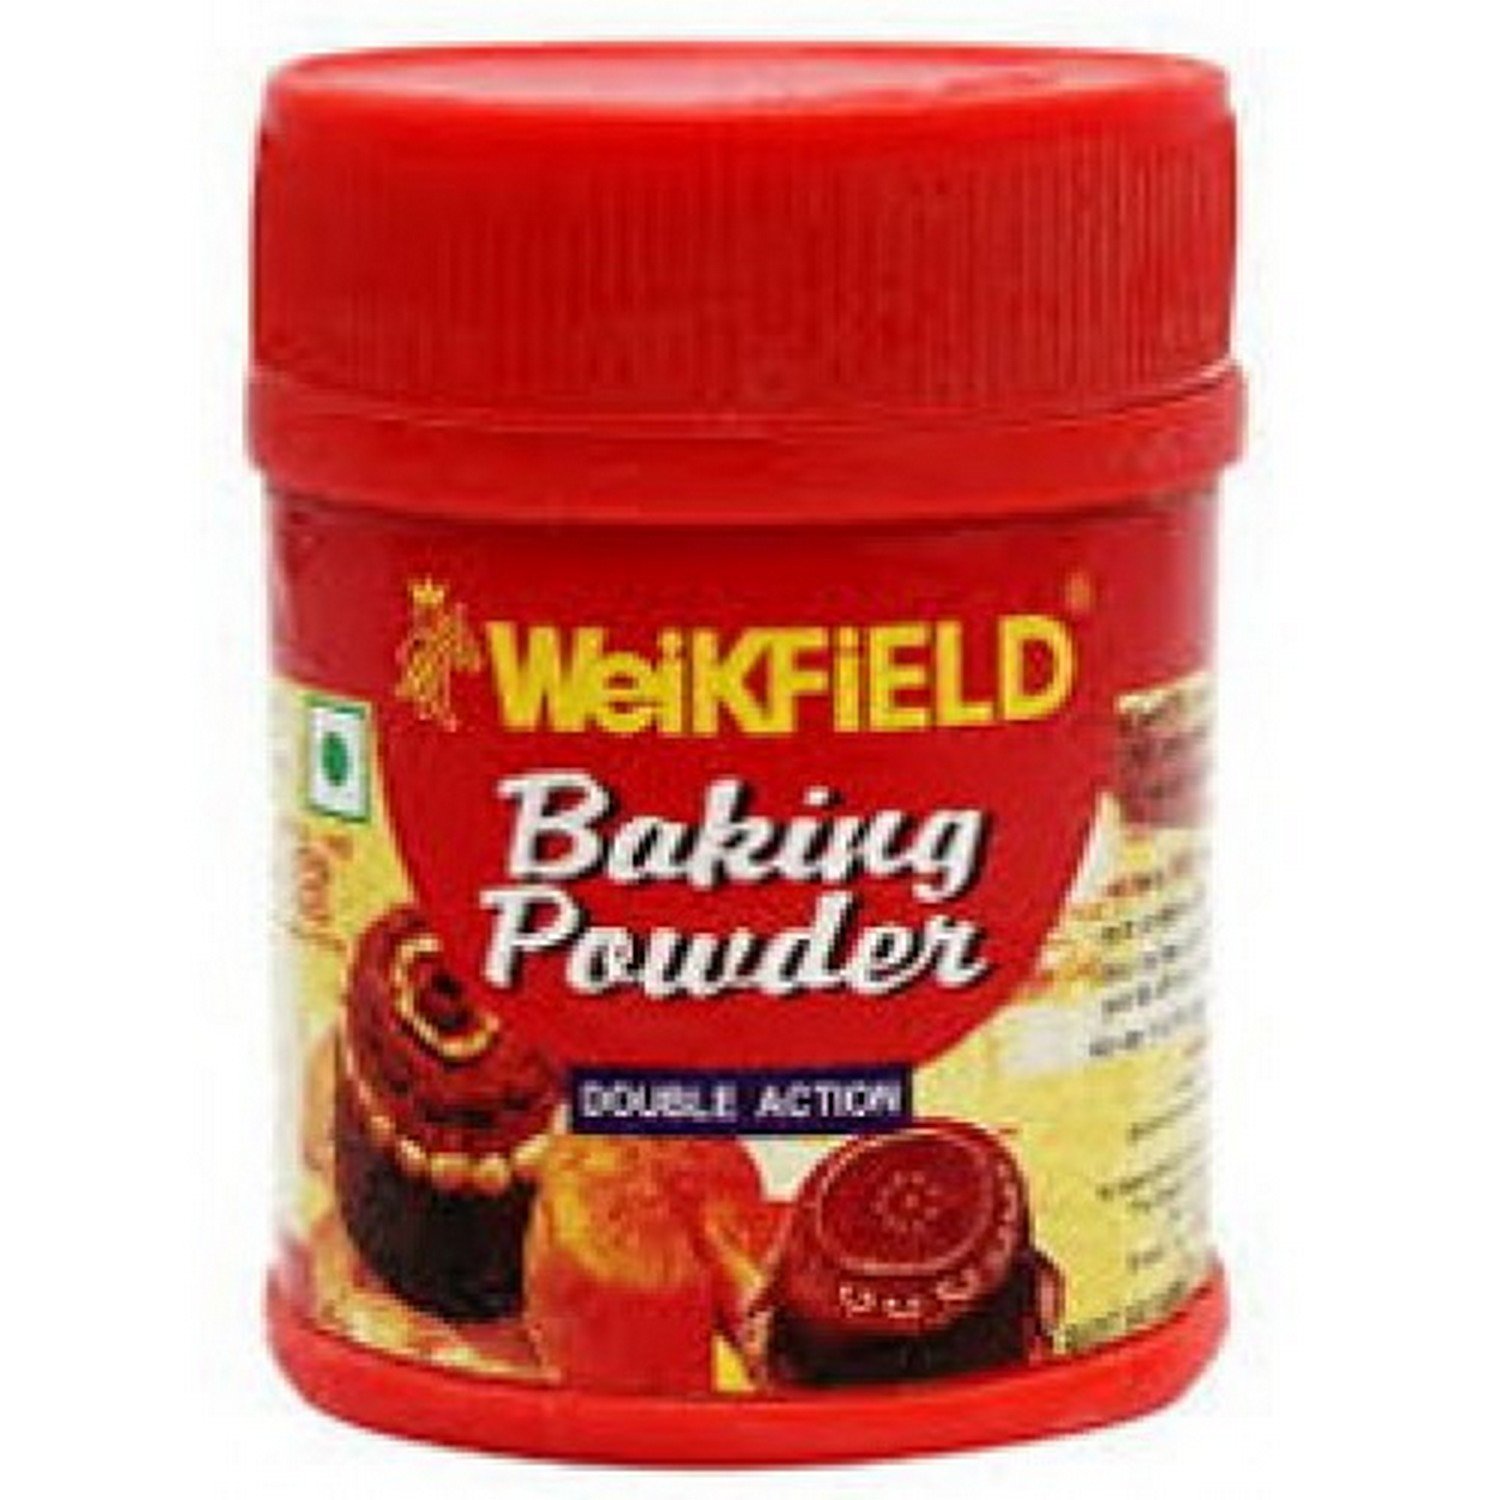 WeiKFiELD Baking Powder 100 gms #47169